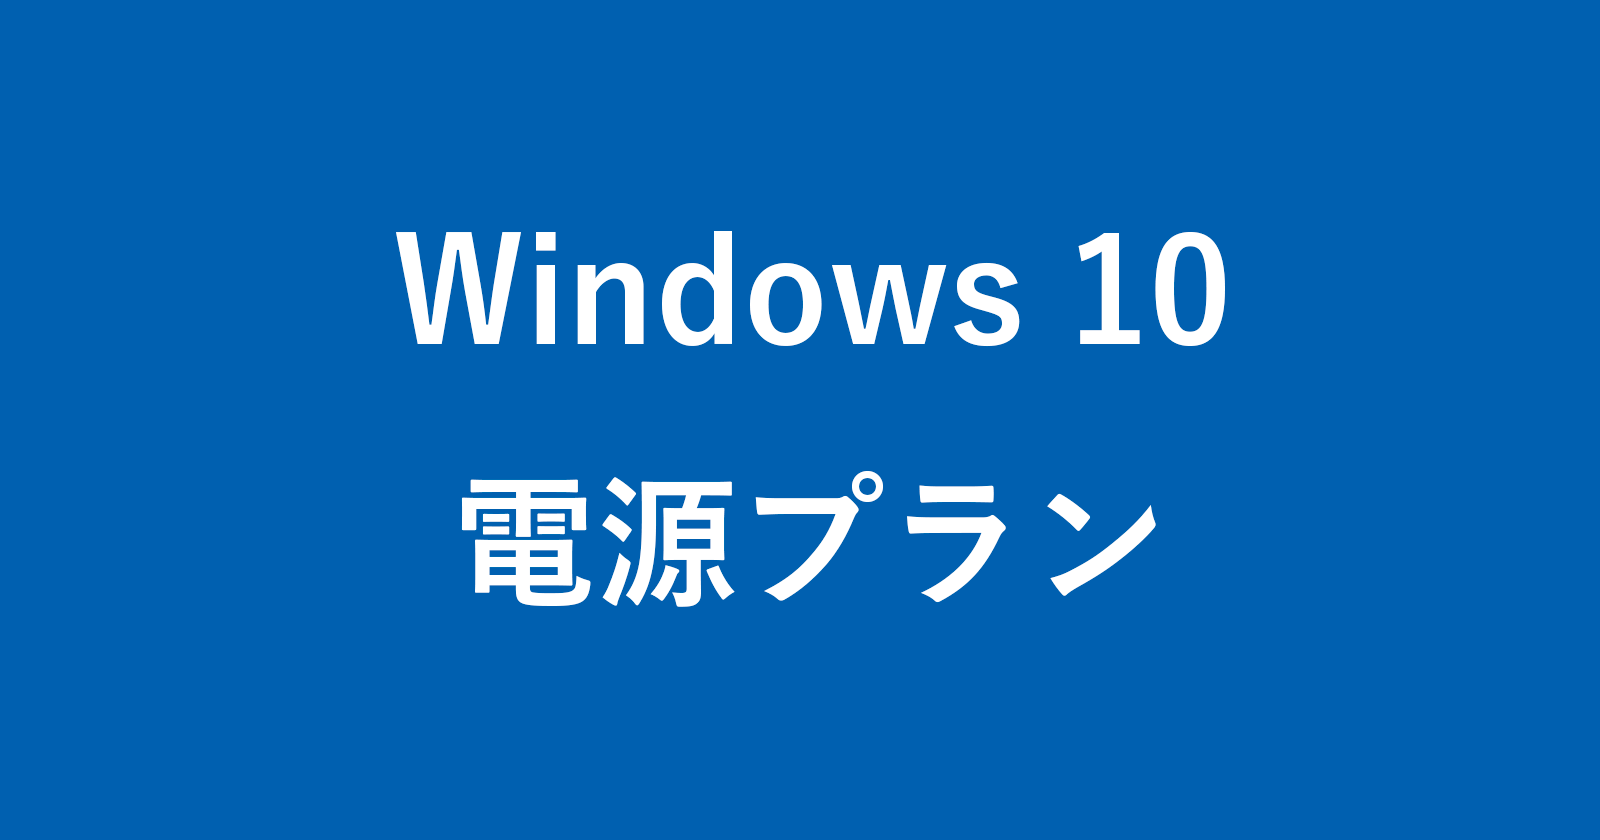 windows 10 power plan